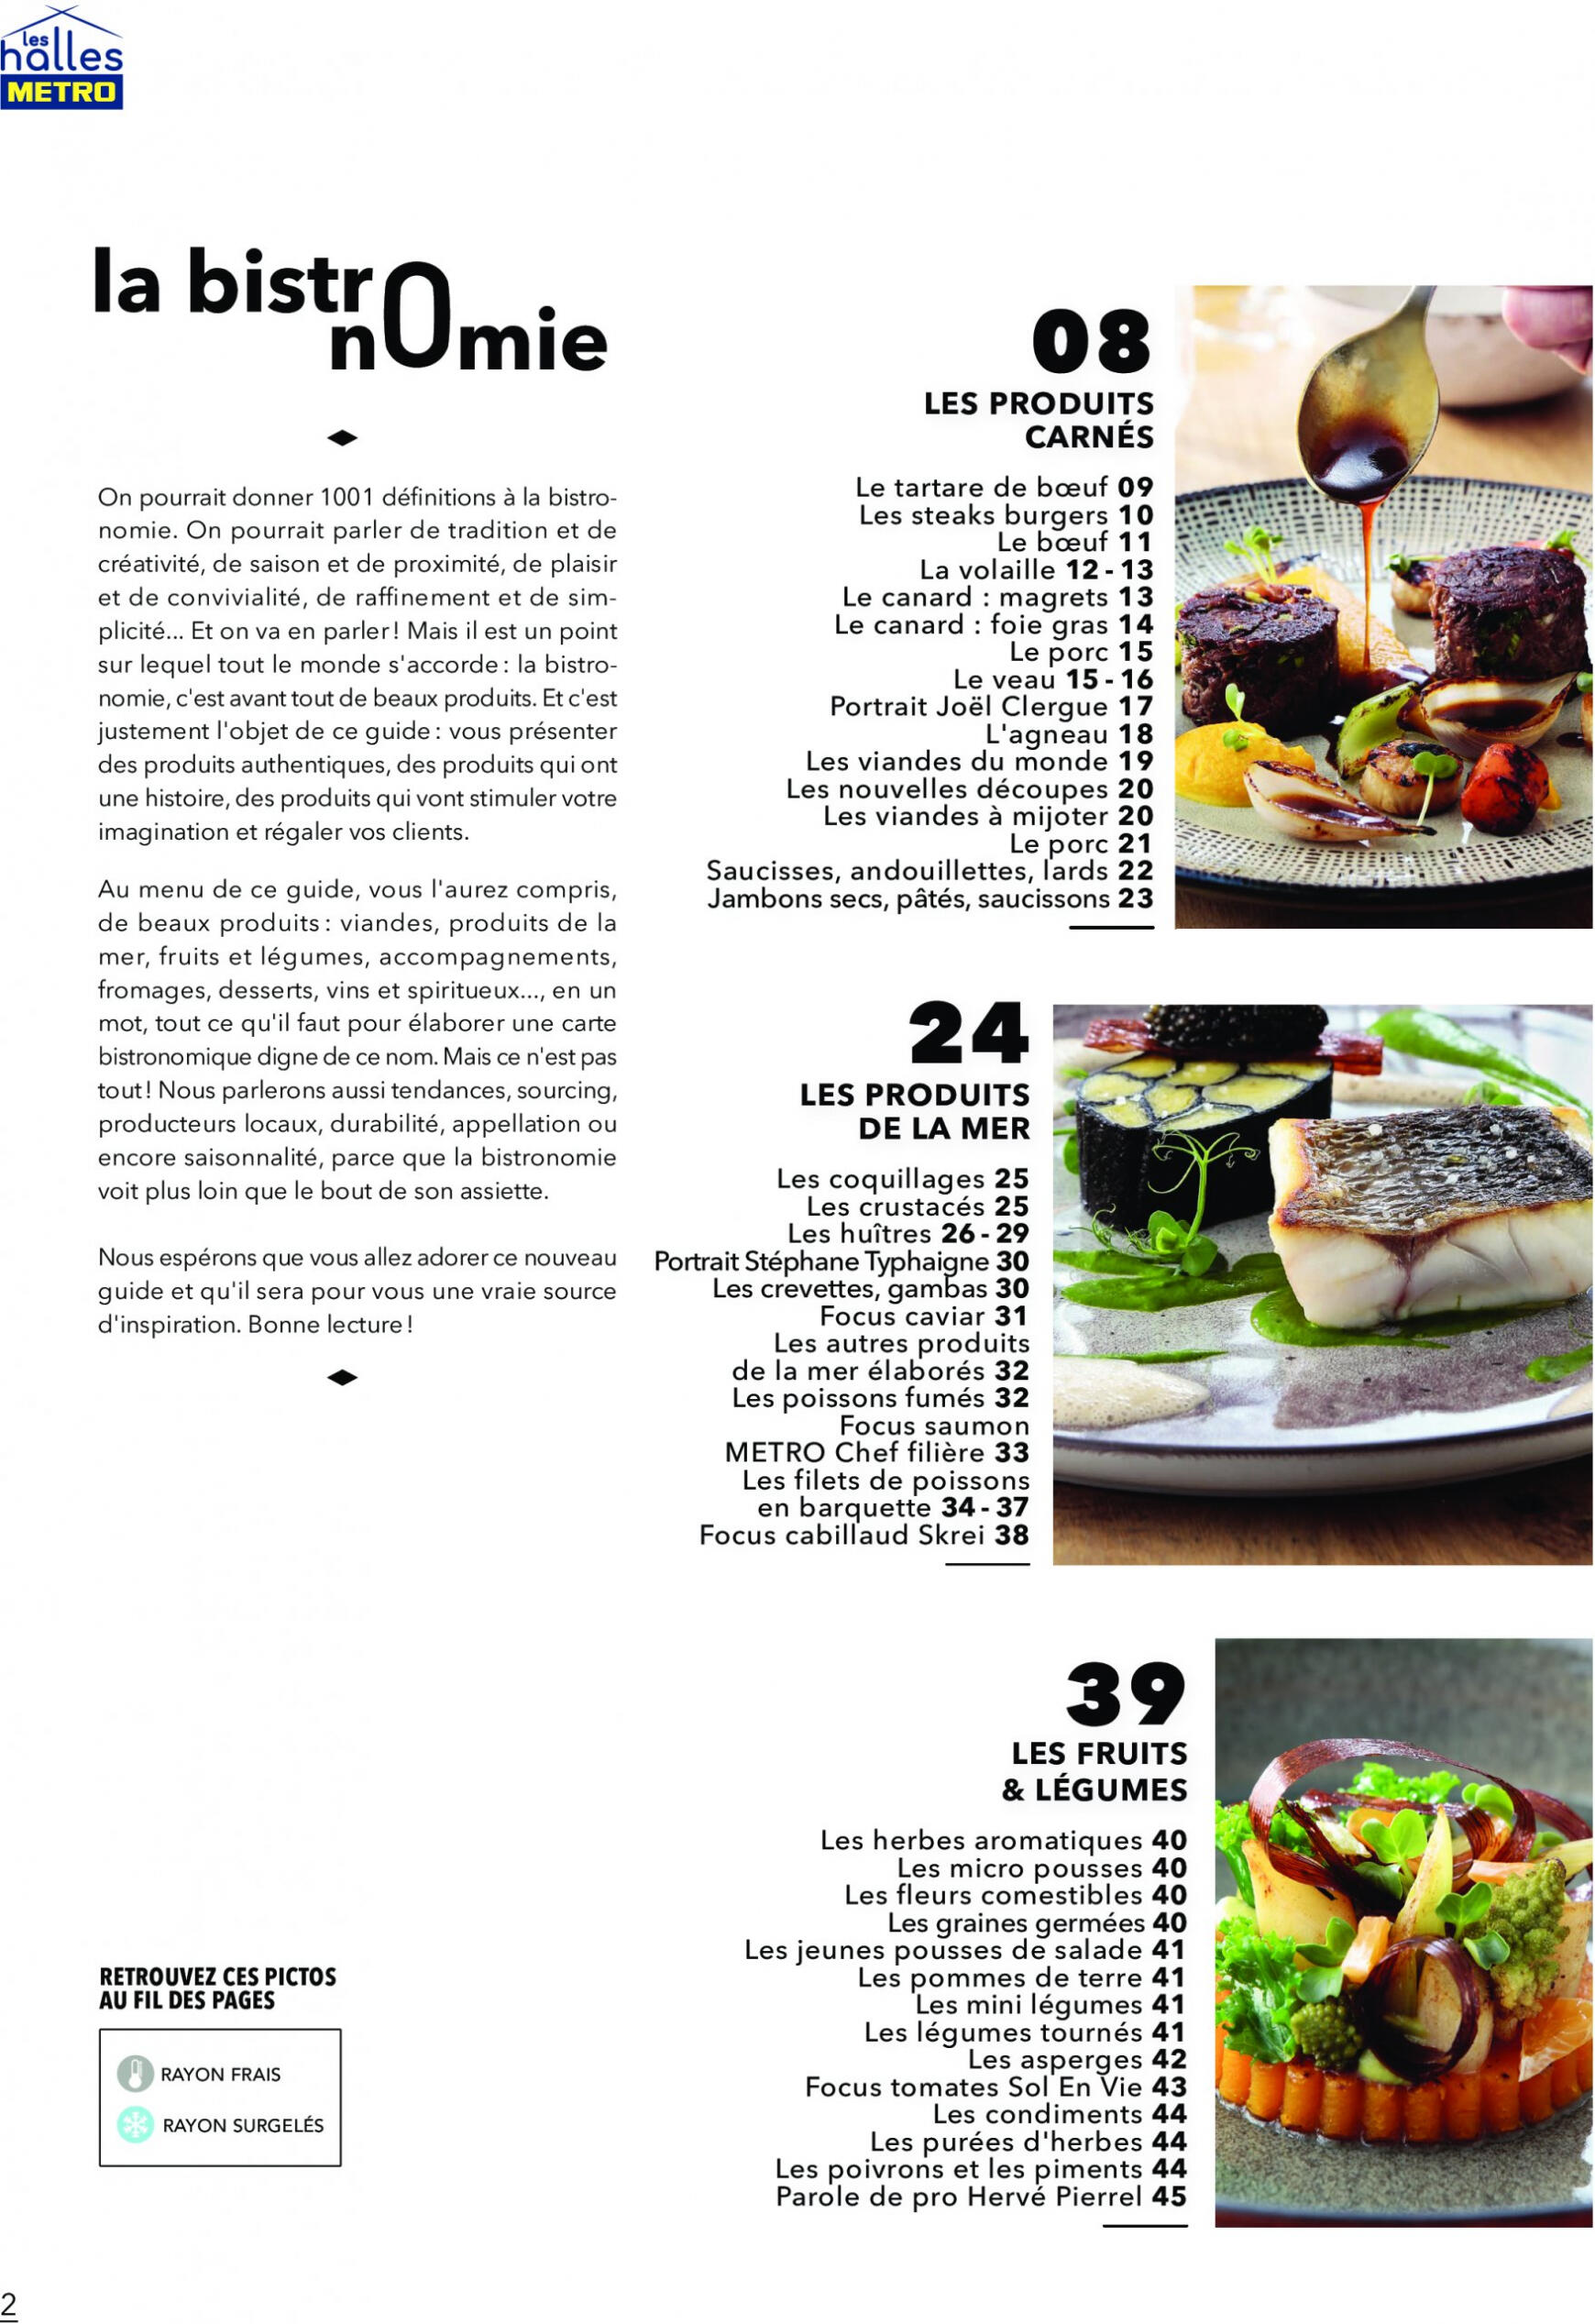 metro - Metro - Guide bistronomie - page: 2